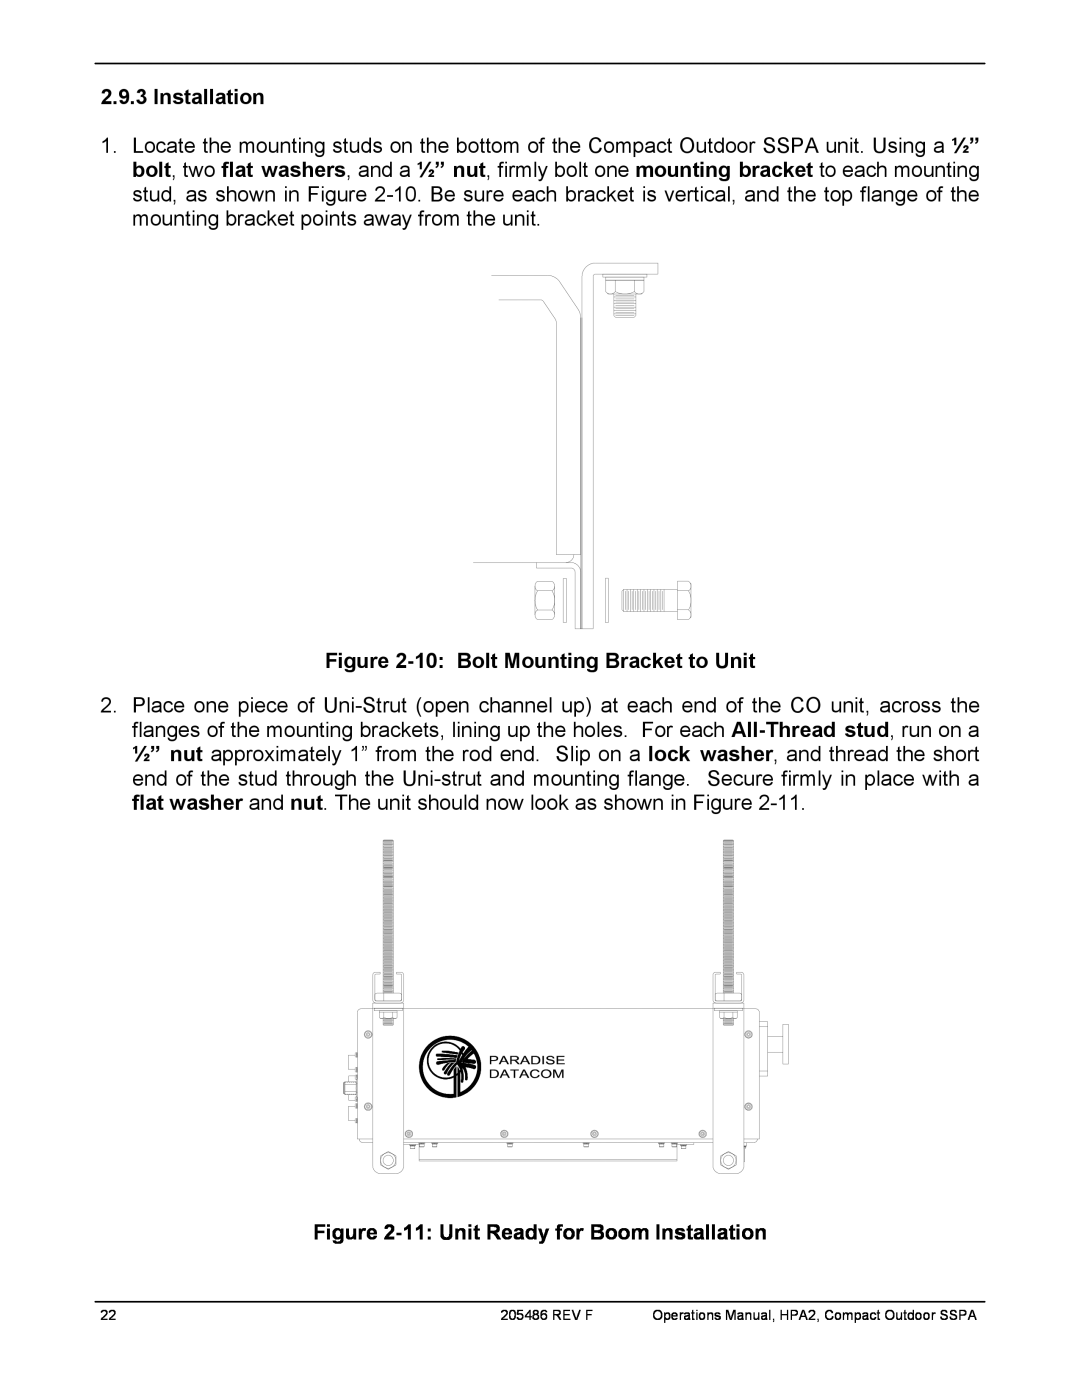 Paradise 205486 REV F manual 10:Bolt Mounting Bracket to Unit, 11:Unit Ready for Boom Installation, Rev F 